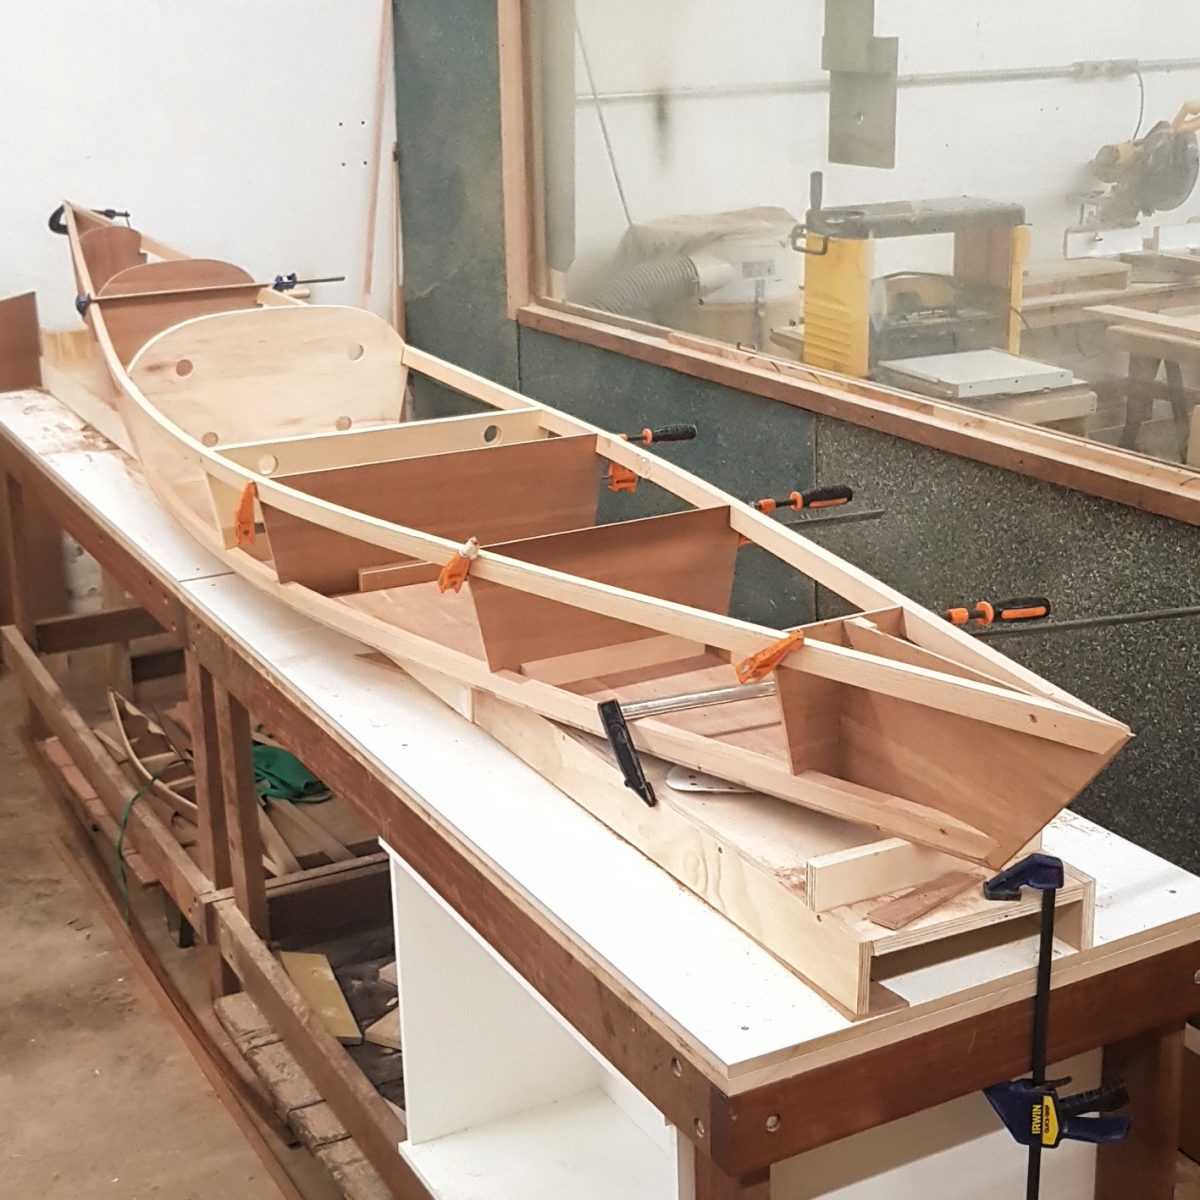 plywood kayak plans - 24 hour kayak - frames ashes still